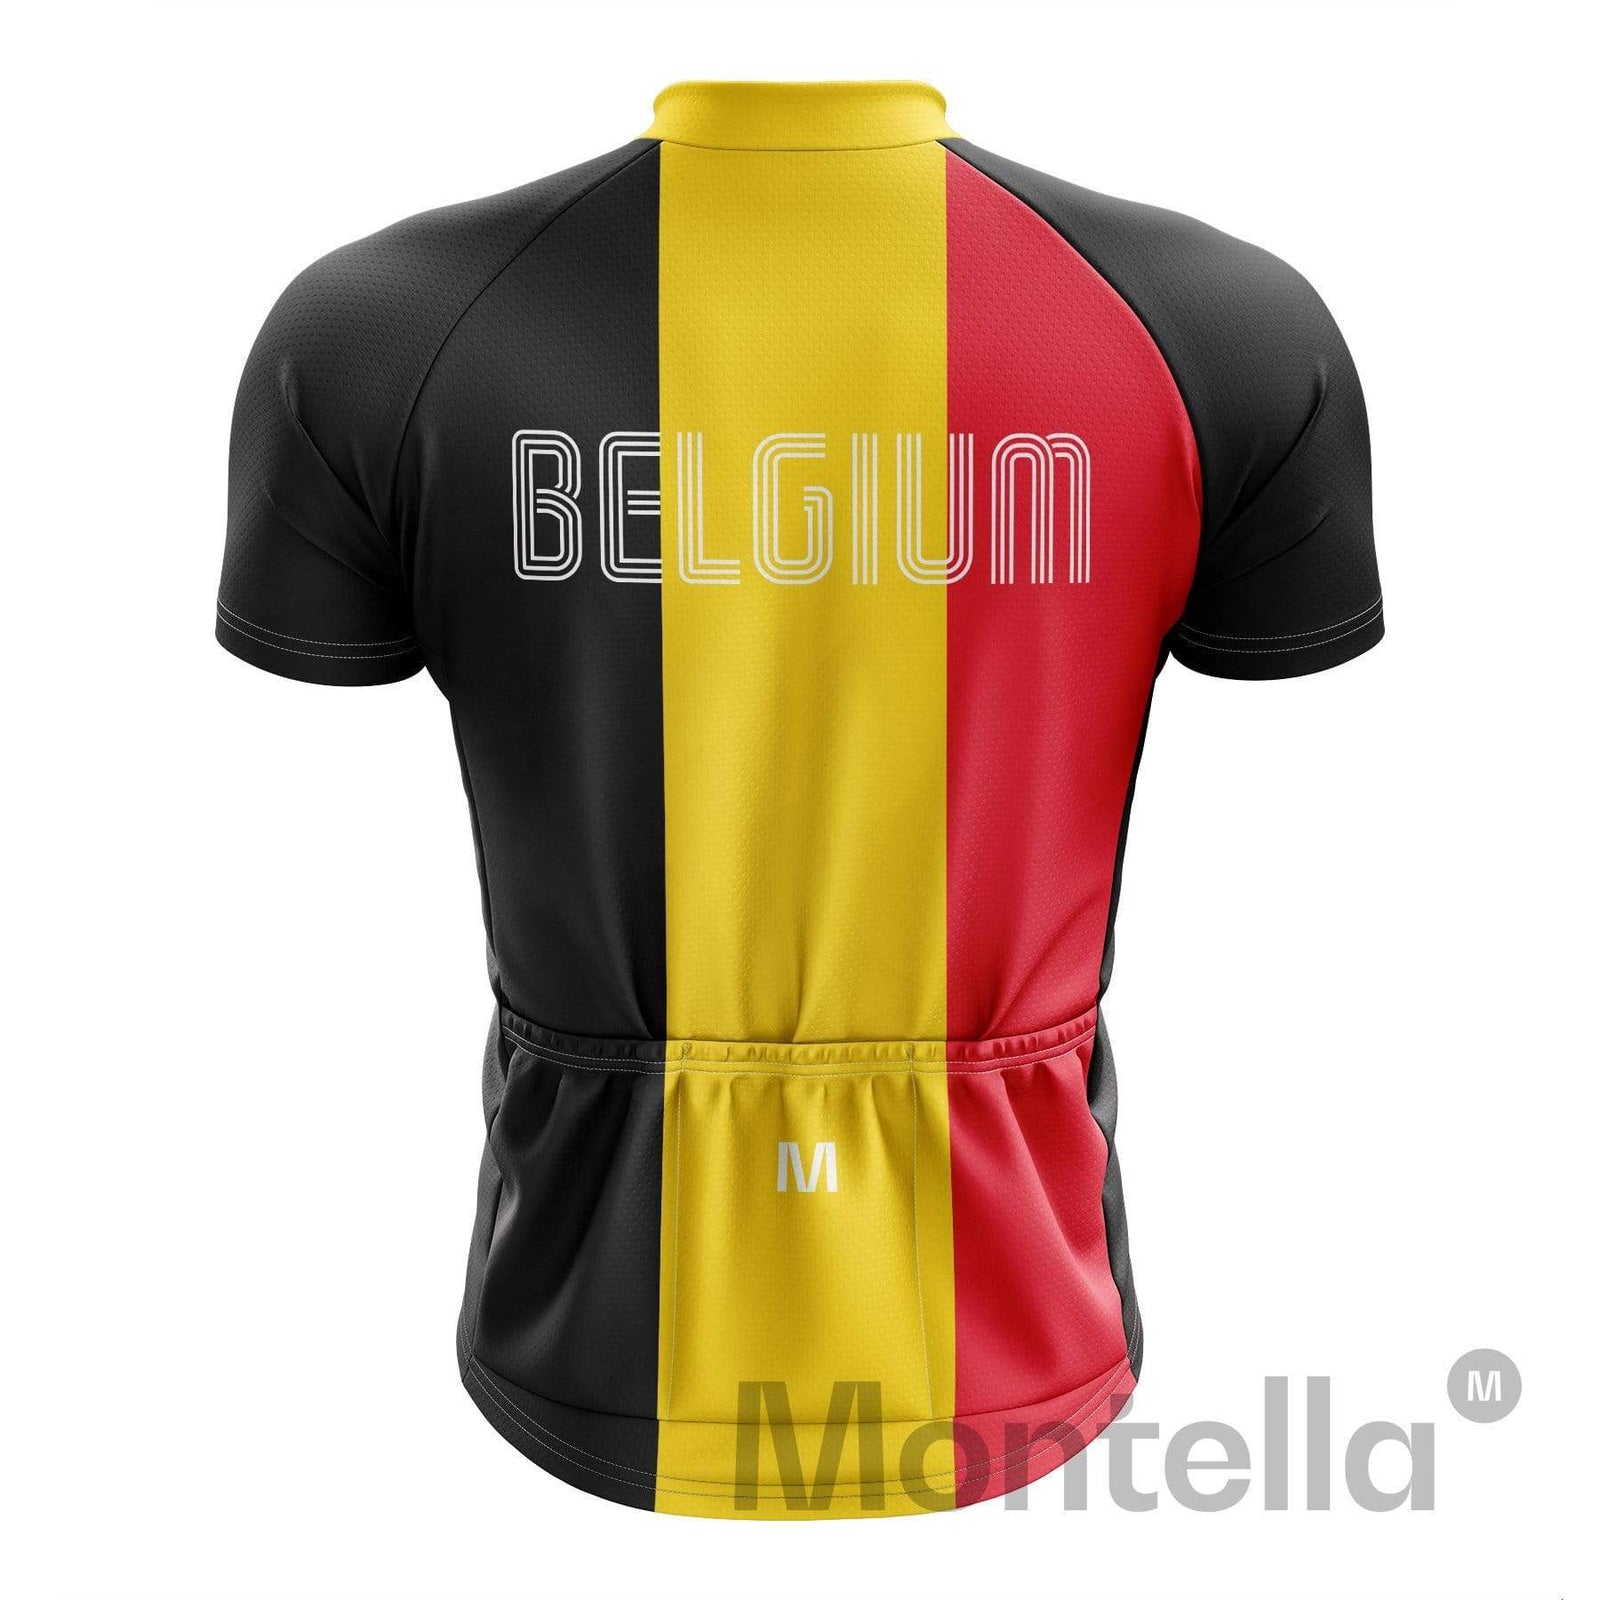 Montella Cycling Cycling Kit Men's Belgium Cycling Jersey or Bibs